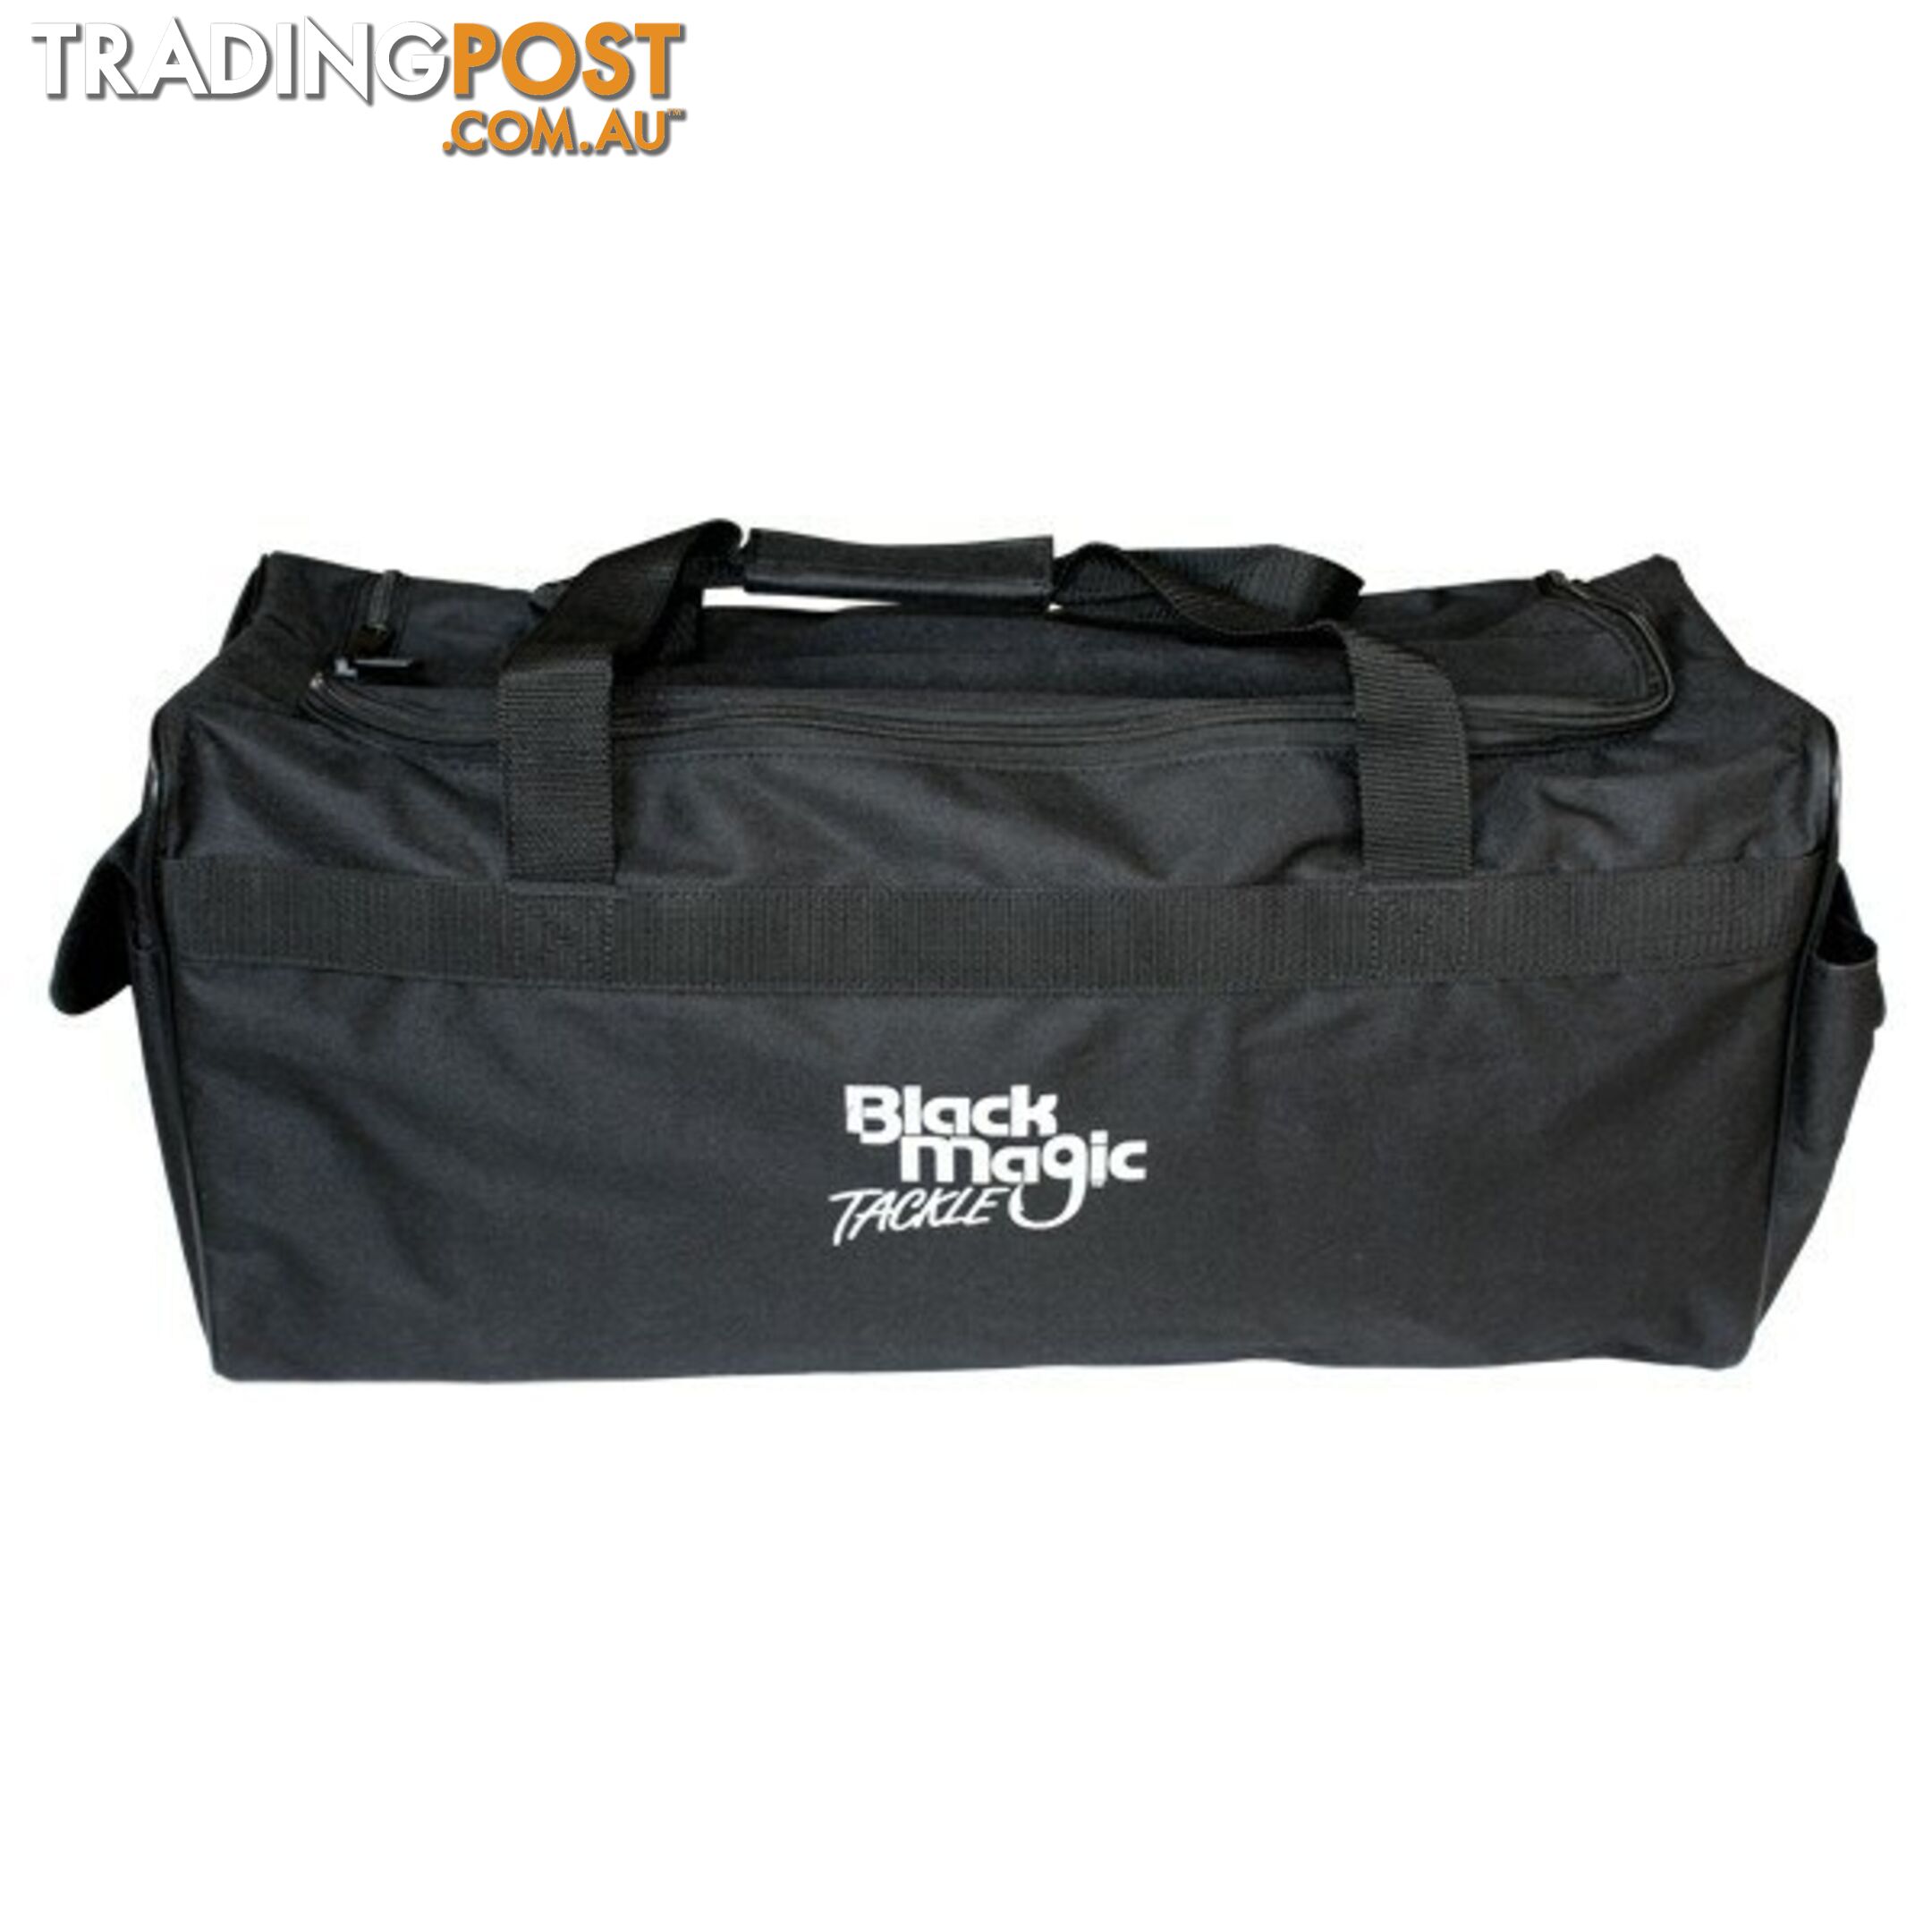 Gear Bag - Black Magic Tackle Duffle Bag - (CBAG) BM Gear Bag ONLY - Black Magic Tackle - 9418125551344